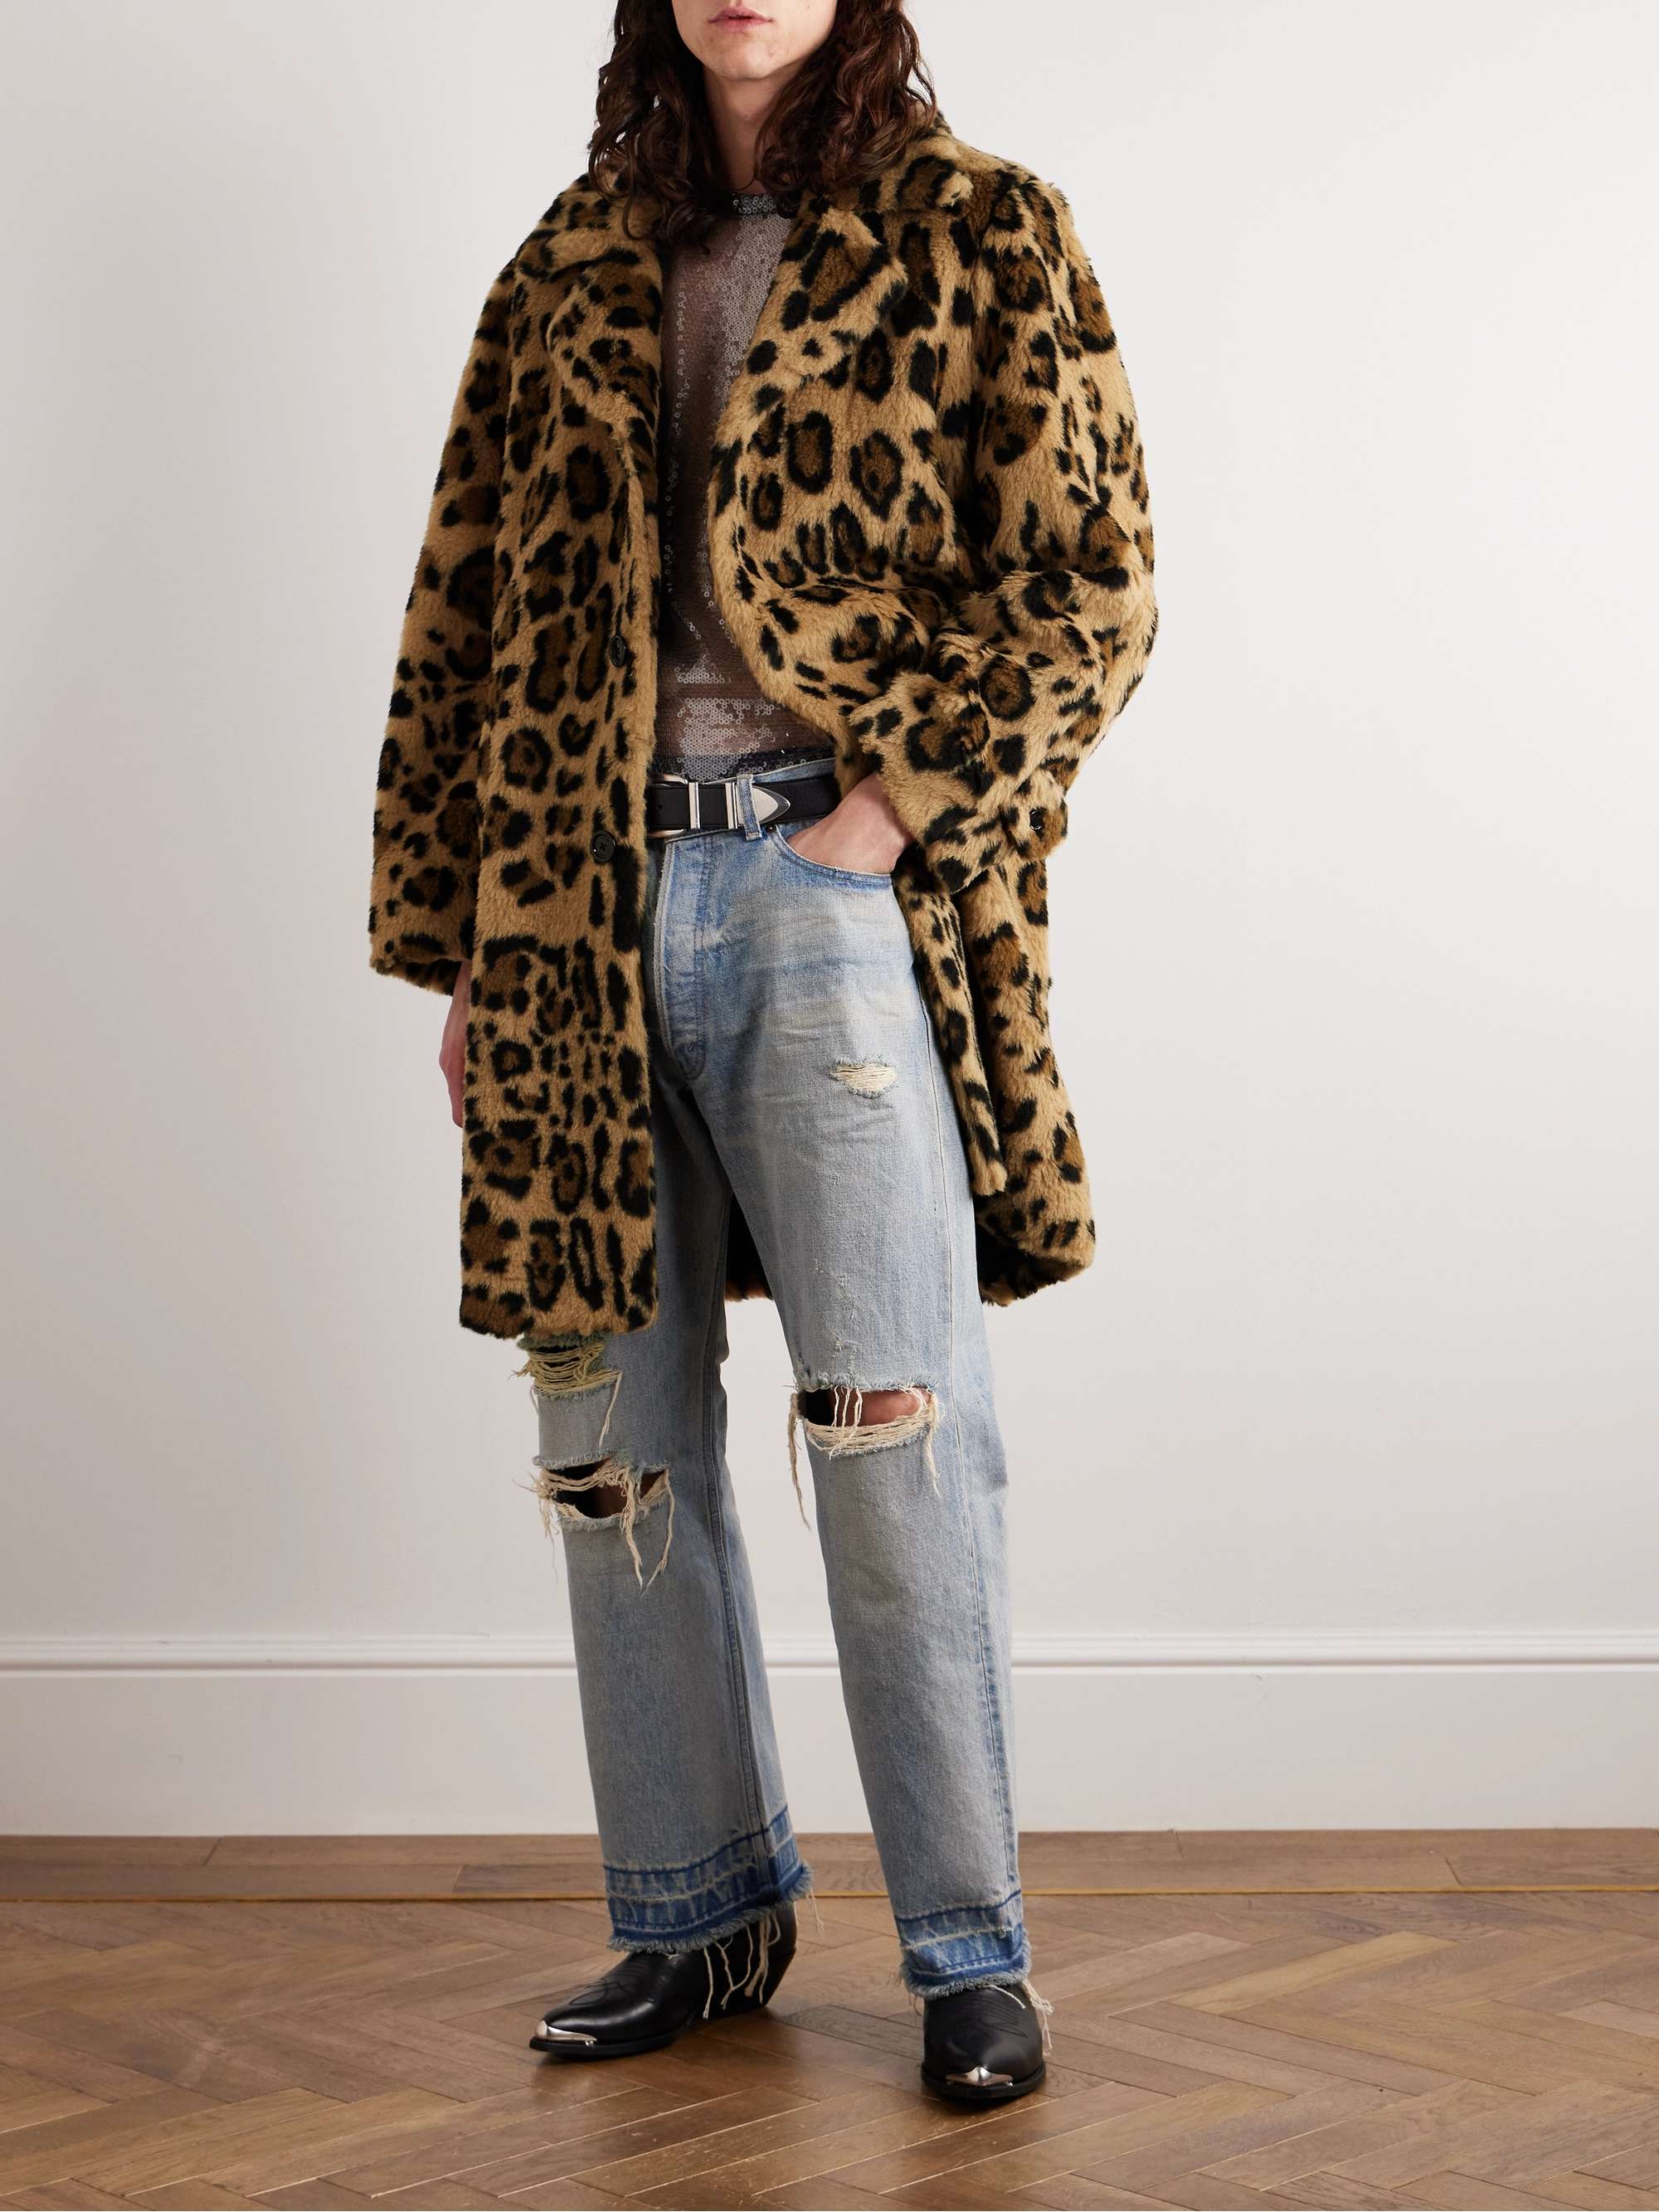 CELINE HOMME Oversized Leopard-Print Alpaca, Wool and Silk-Blend Faux Fur  Coat for Men | MR PORTER